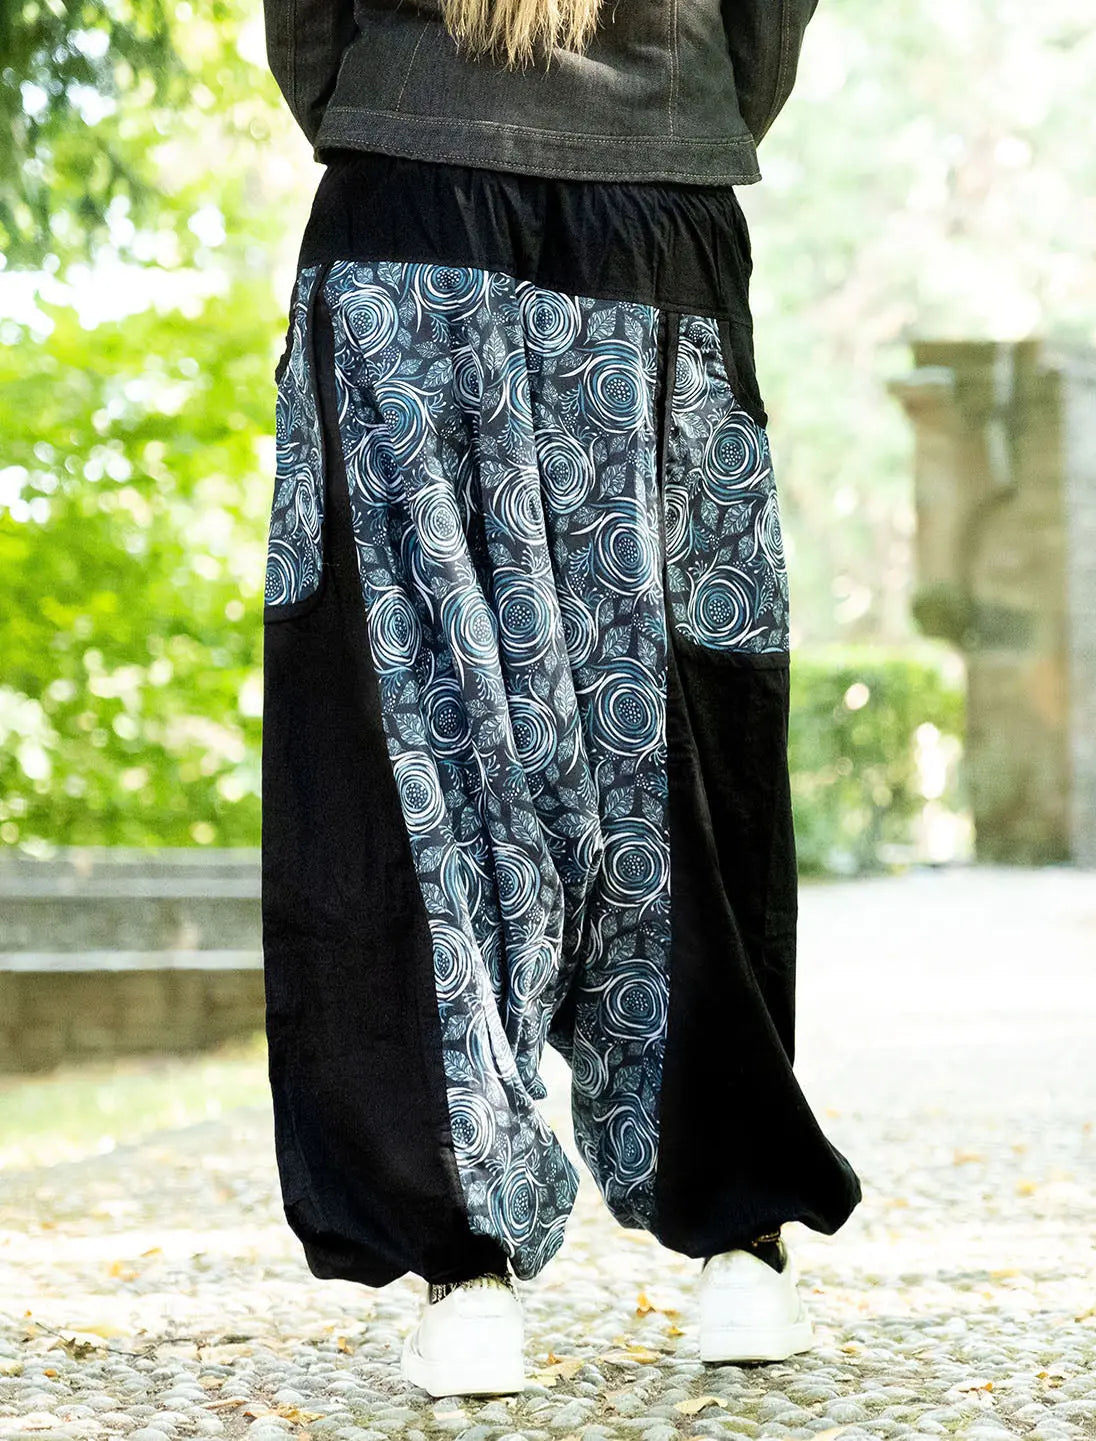 Pantalone donna lungo aladino Maya - Fiore spirale blu grigio Namastemood